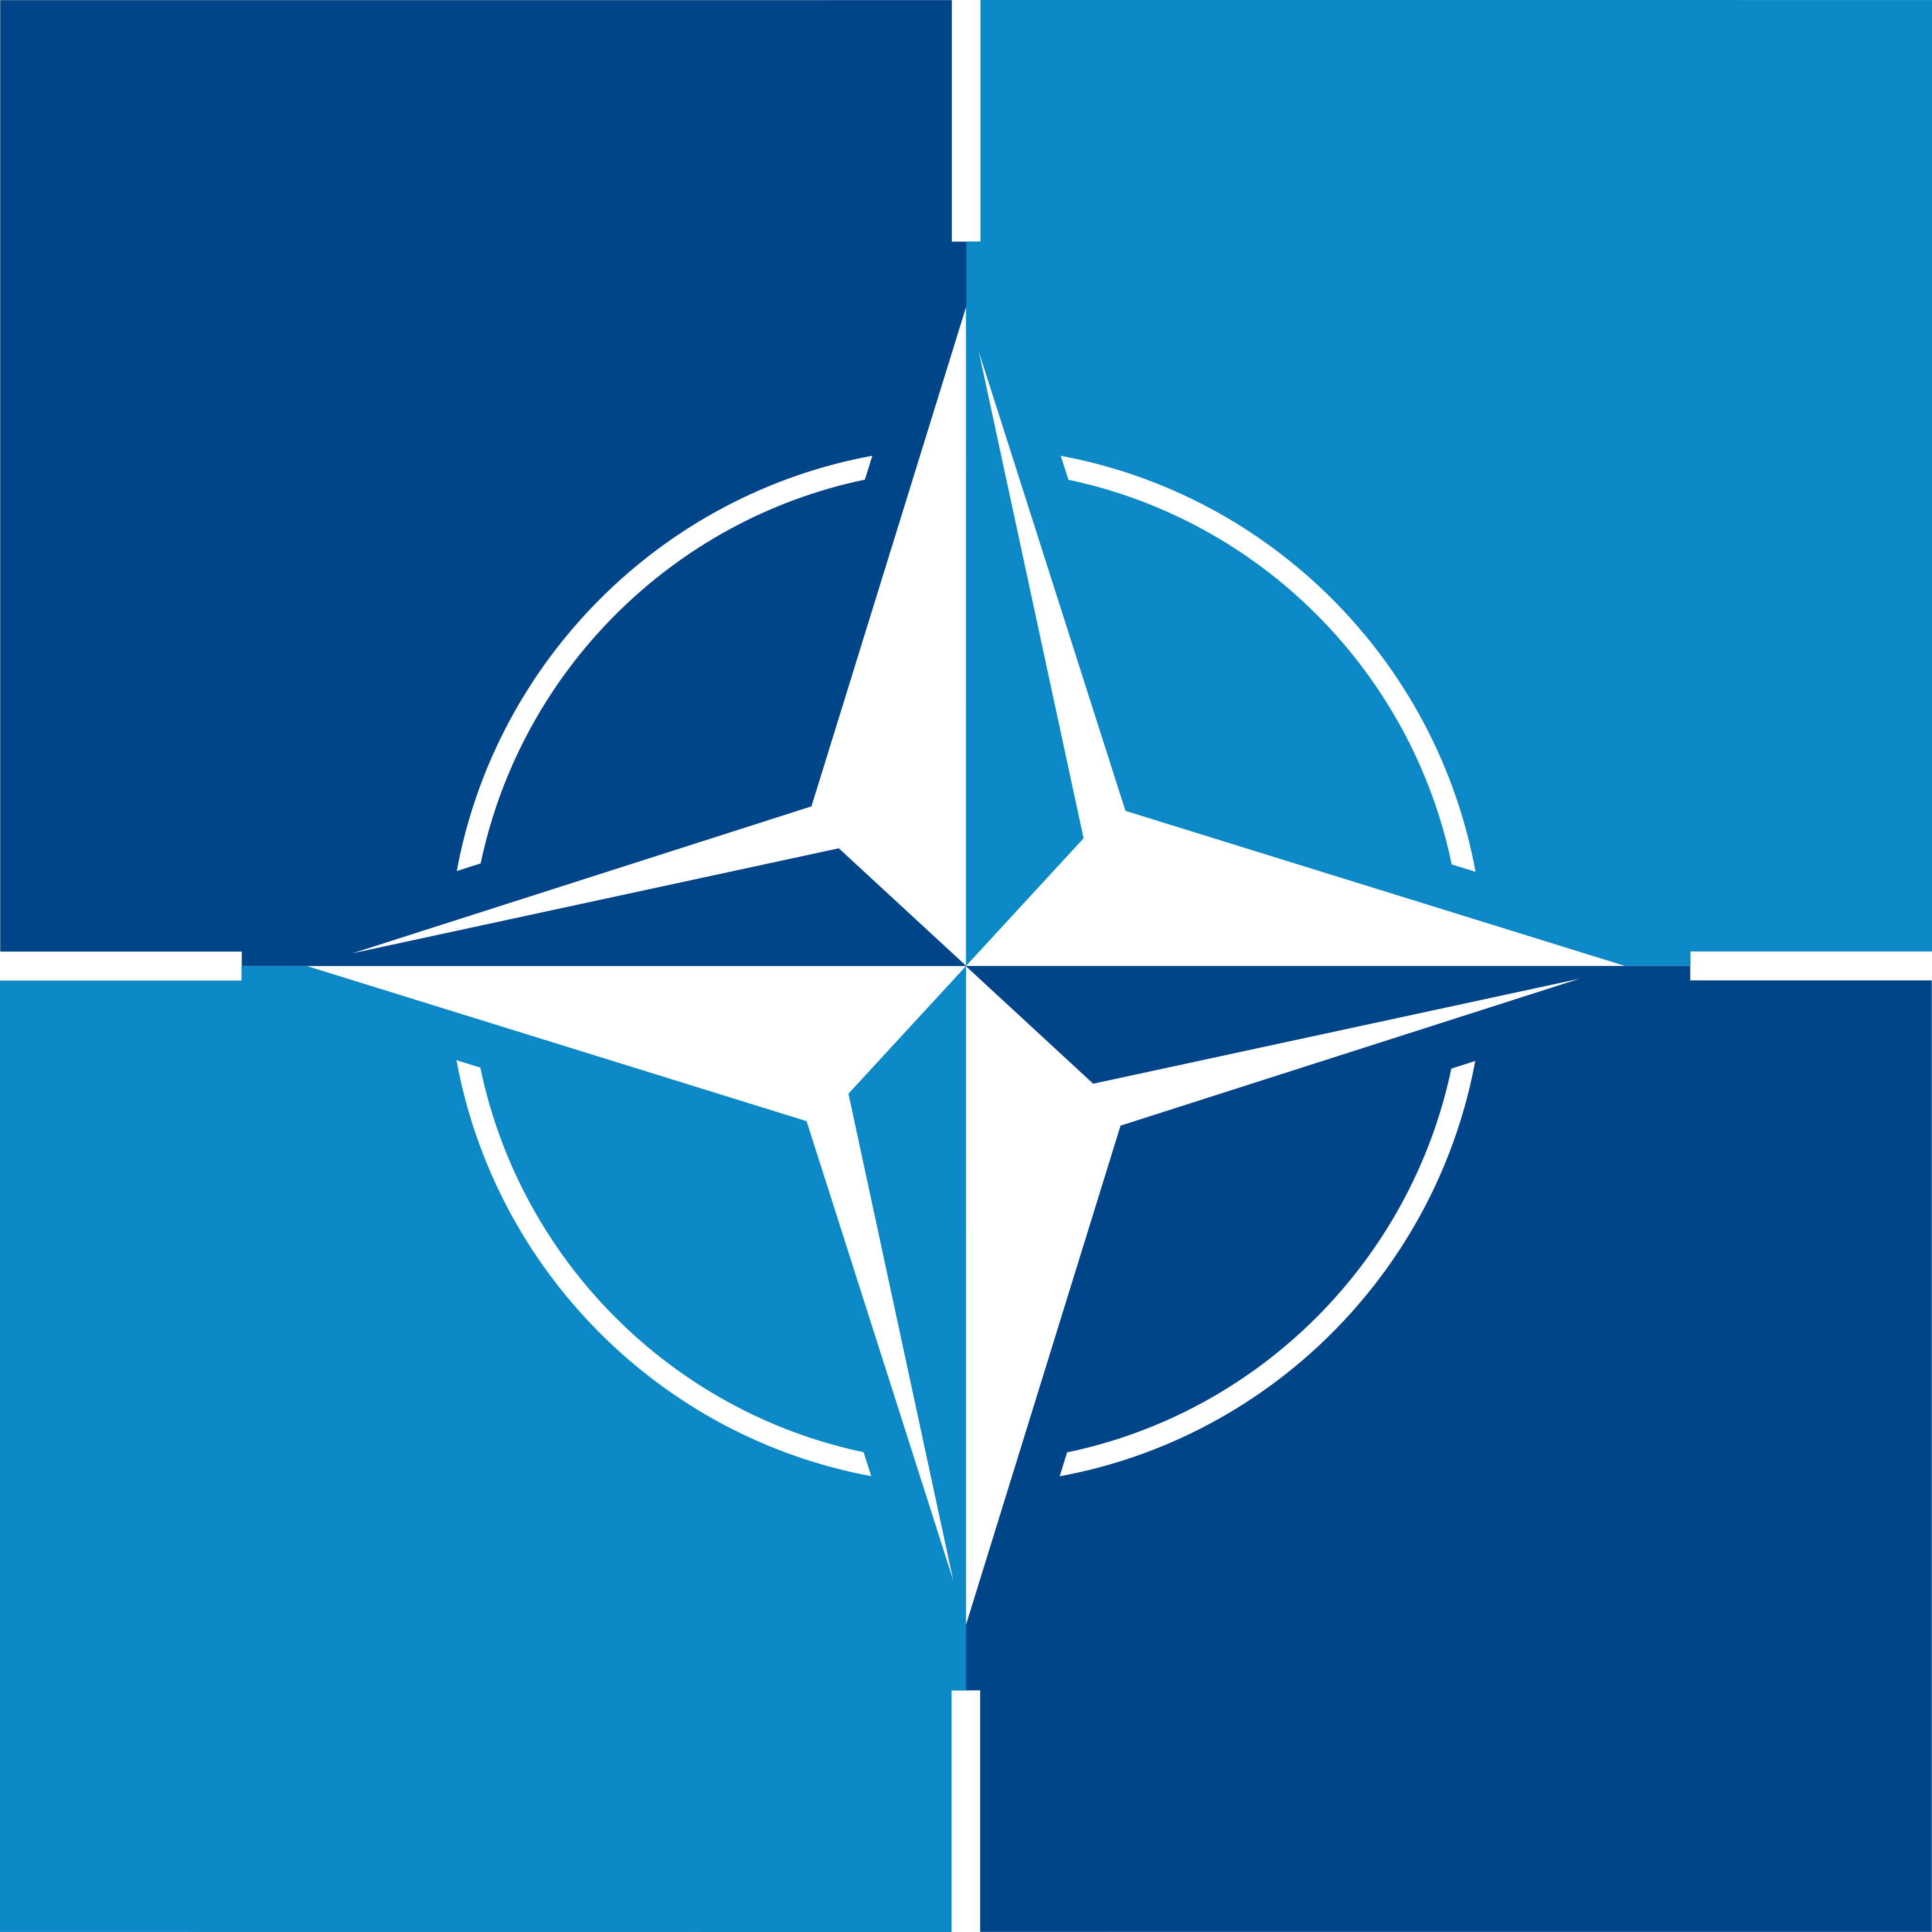 nato otan logo 5 - Otan Logo - Nato Logo